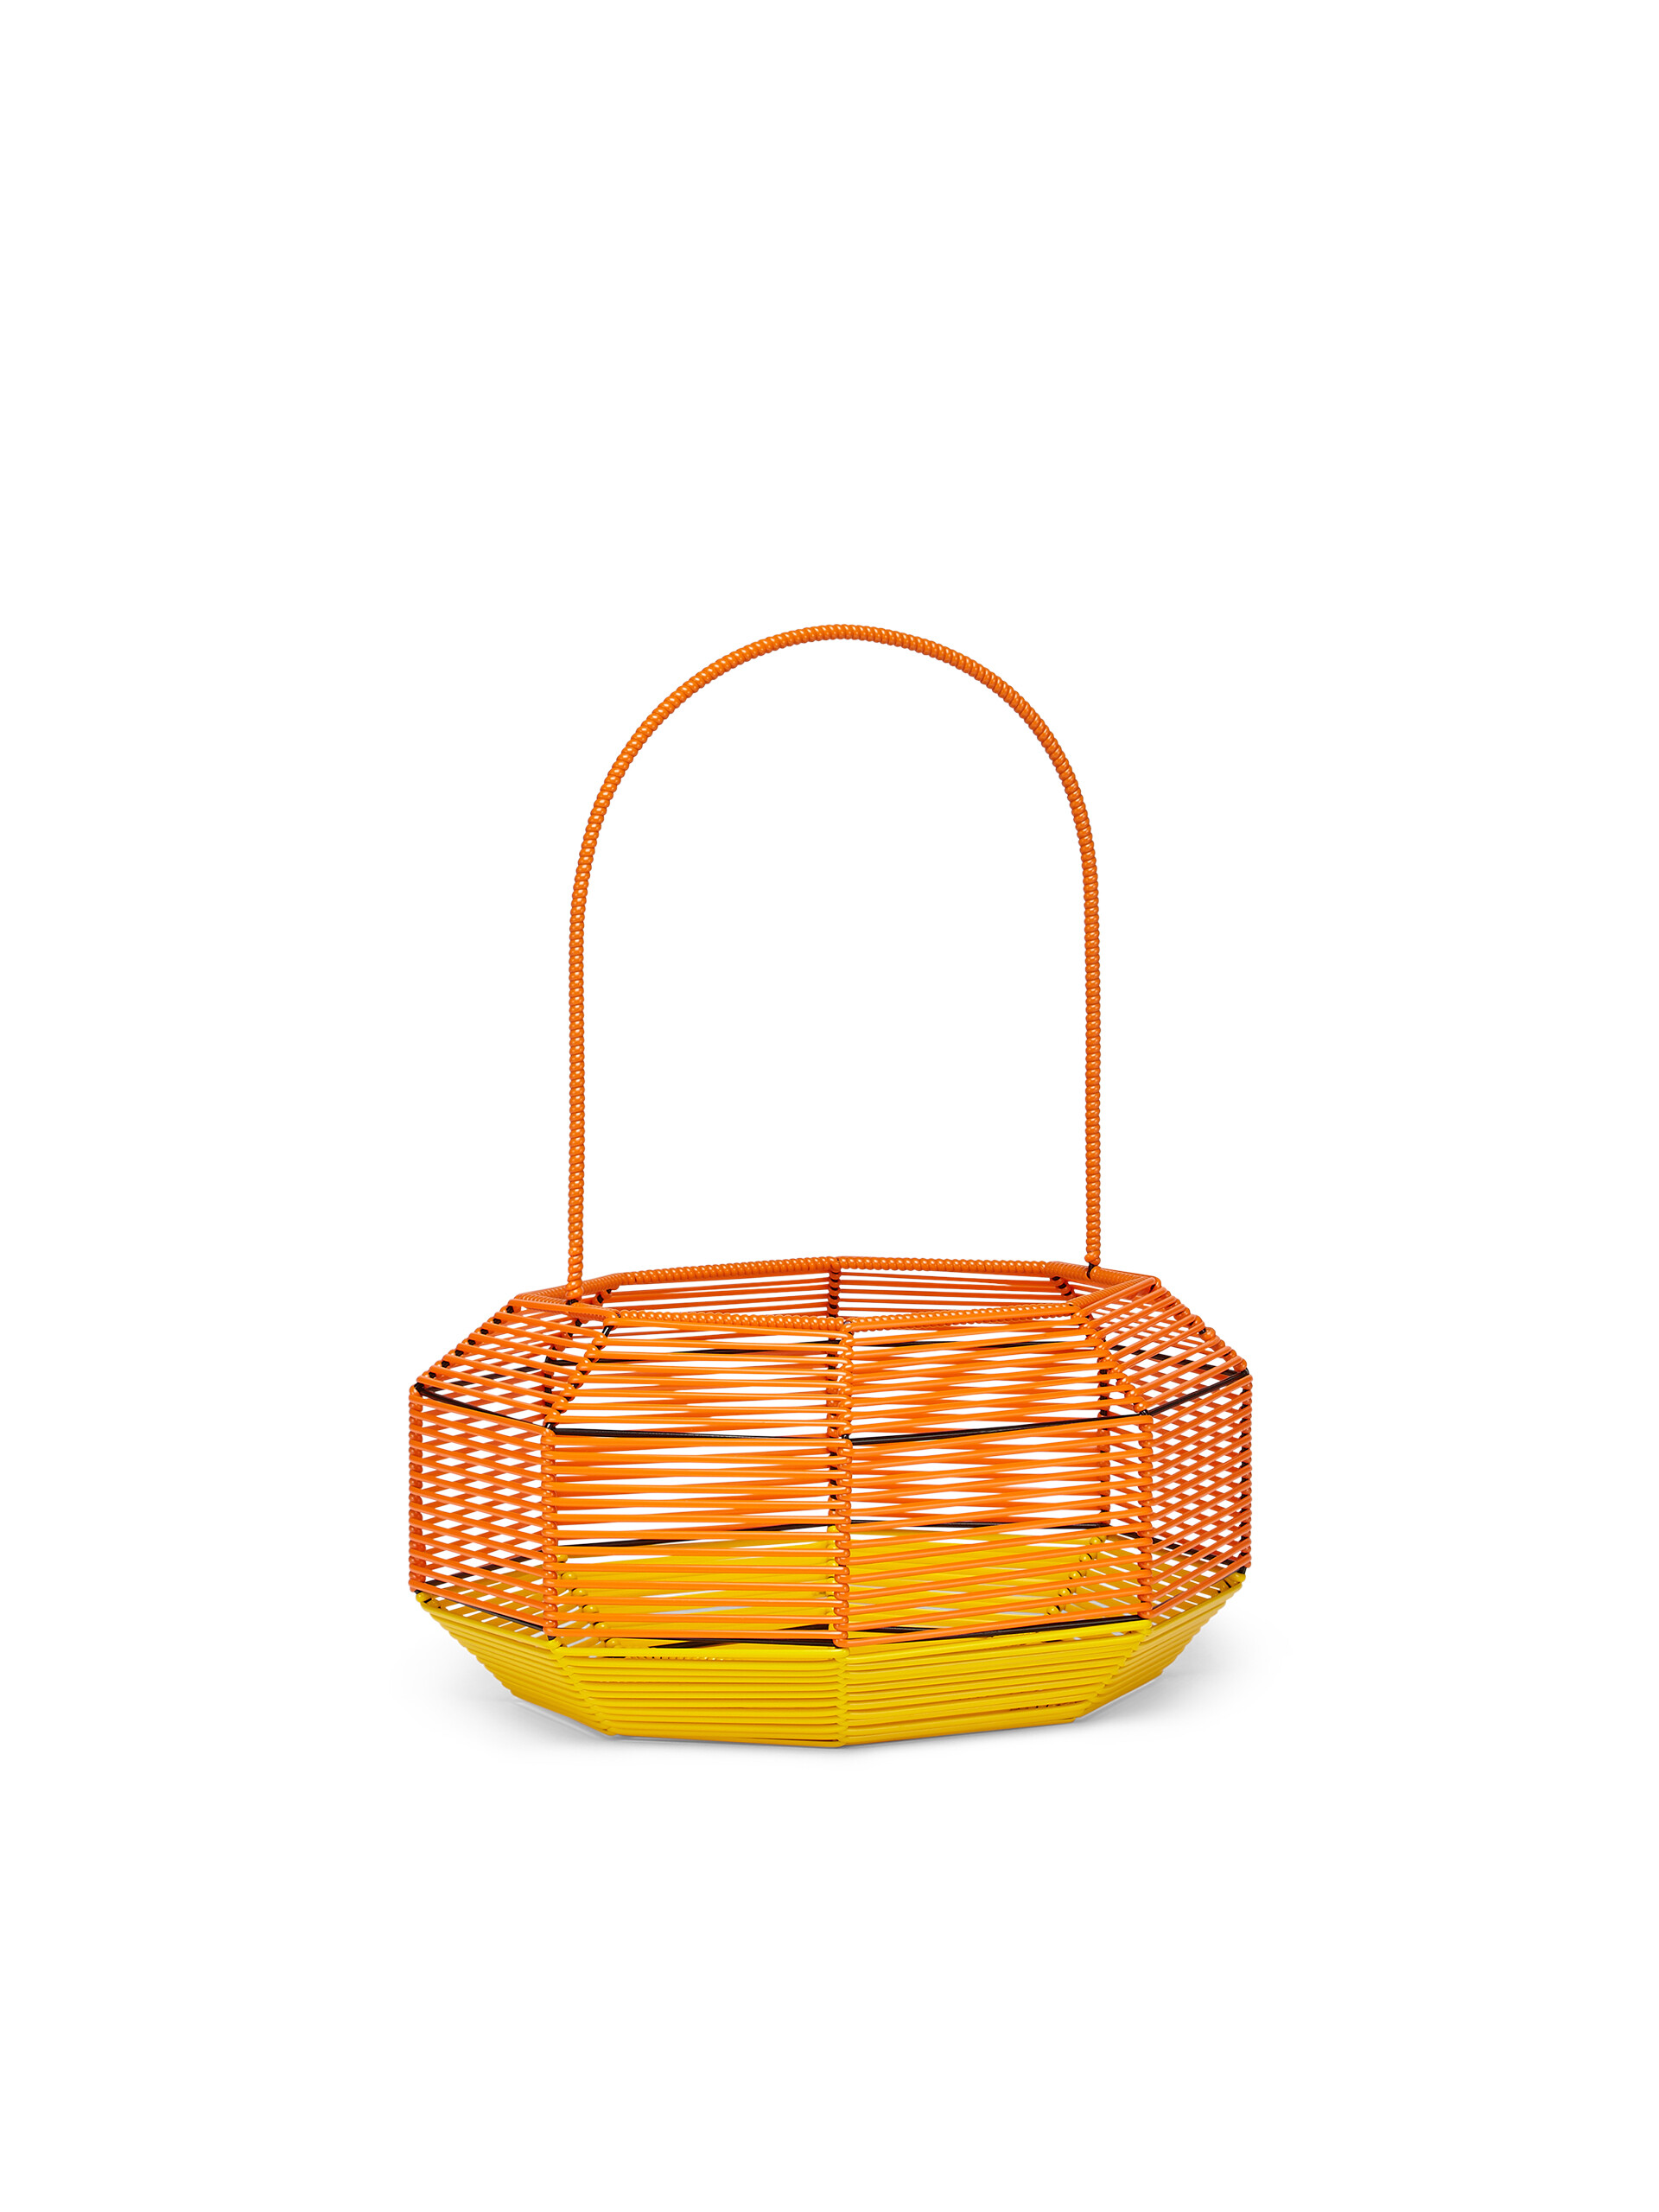 MARNI MARKET octagonal basket - Furniture - Image 2